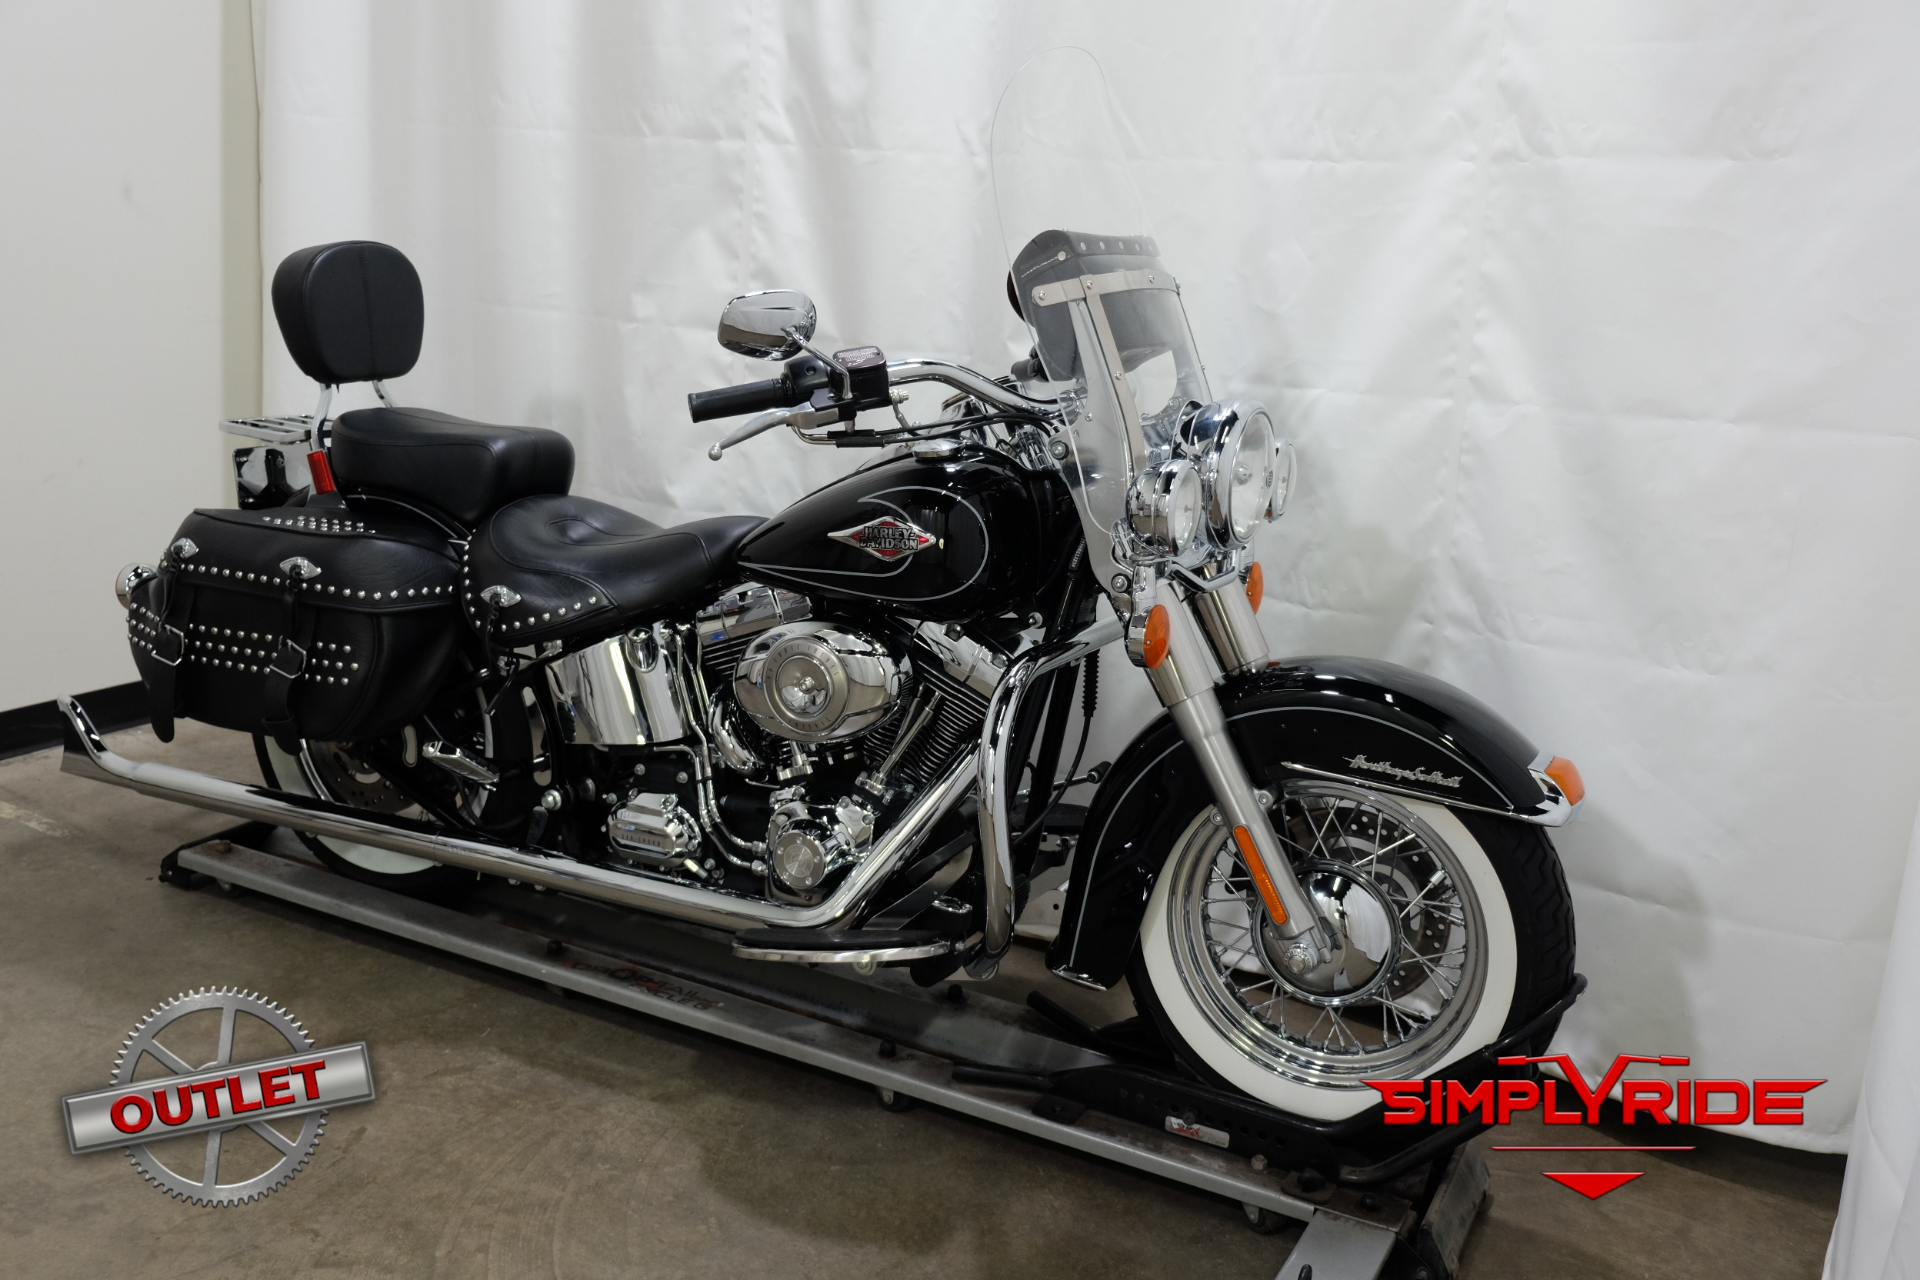 2010 Harley-Davidson Heritage Softail® Classic in Eden Prairie, Minnesota - Photo 2